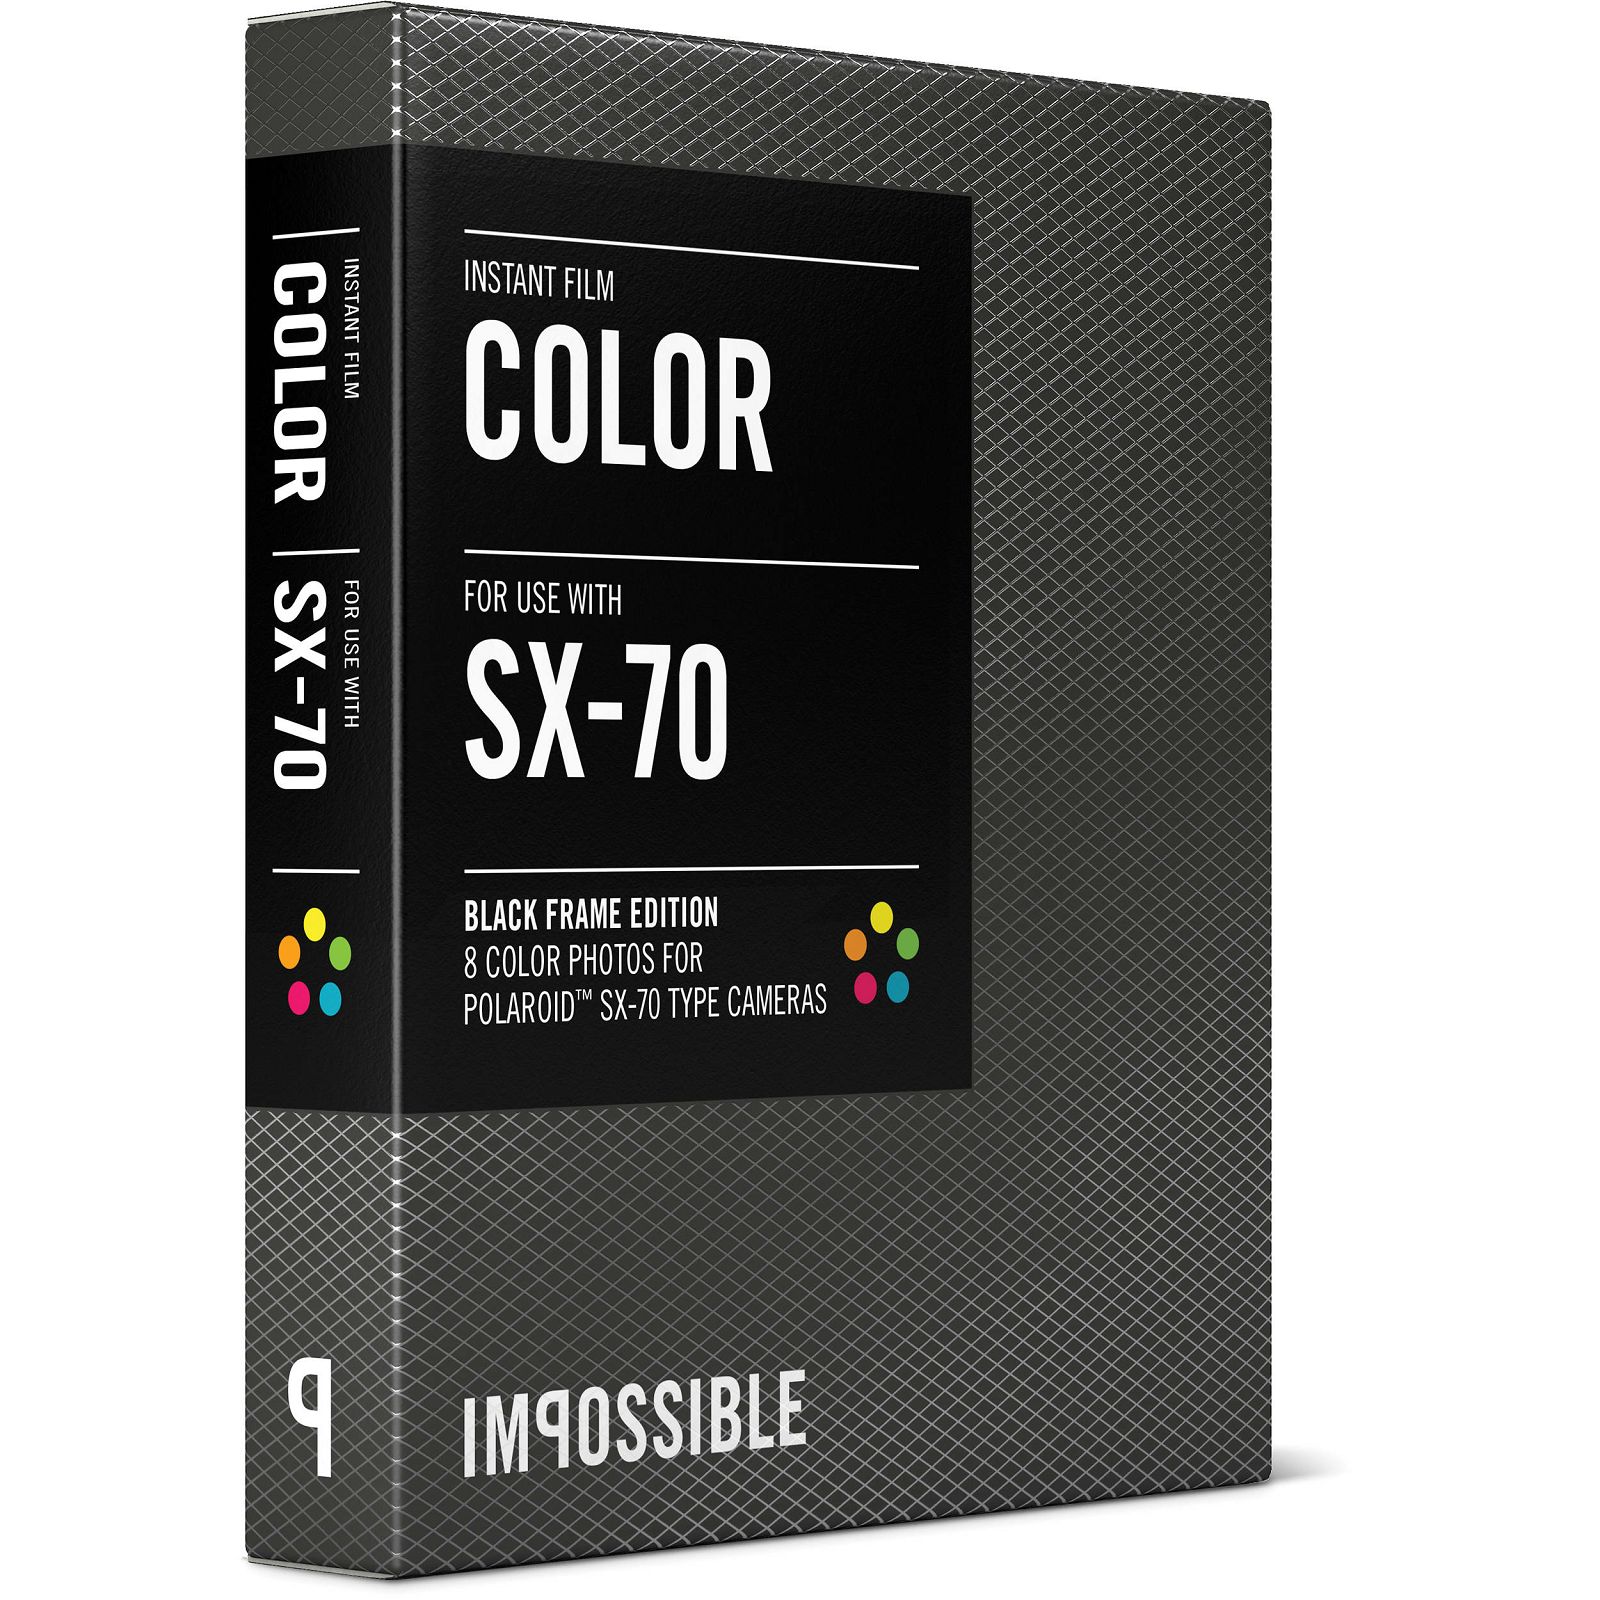 Impossible Color Instant Film for Polaroid SX-70 Cameras (Black Frame, 8 Exposures) SX 70 Color Black Frame (3554)